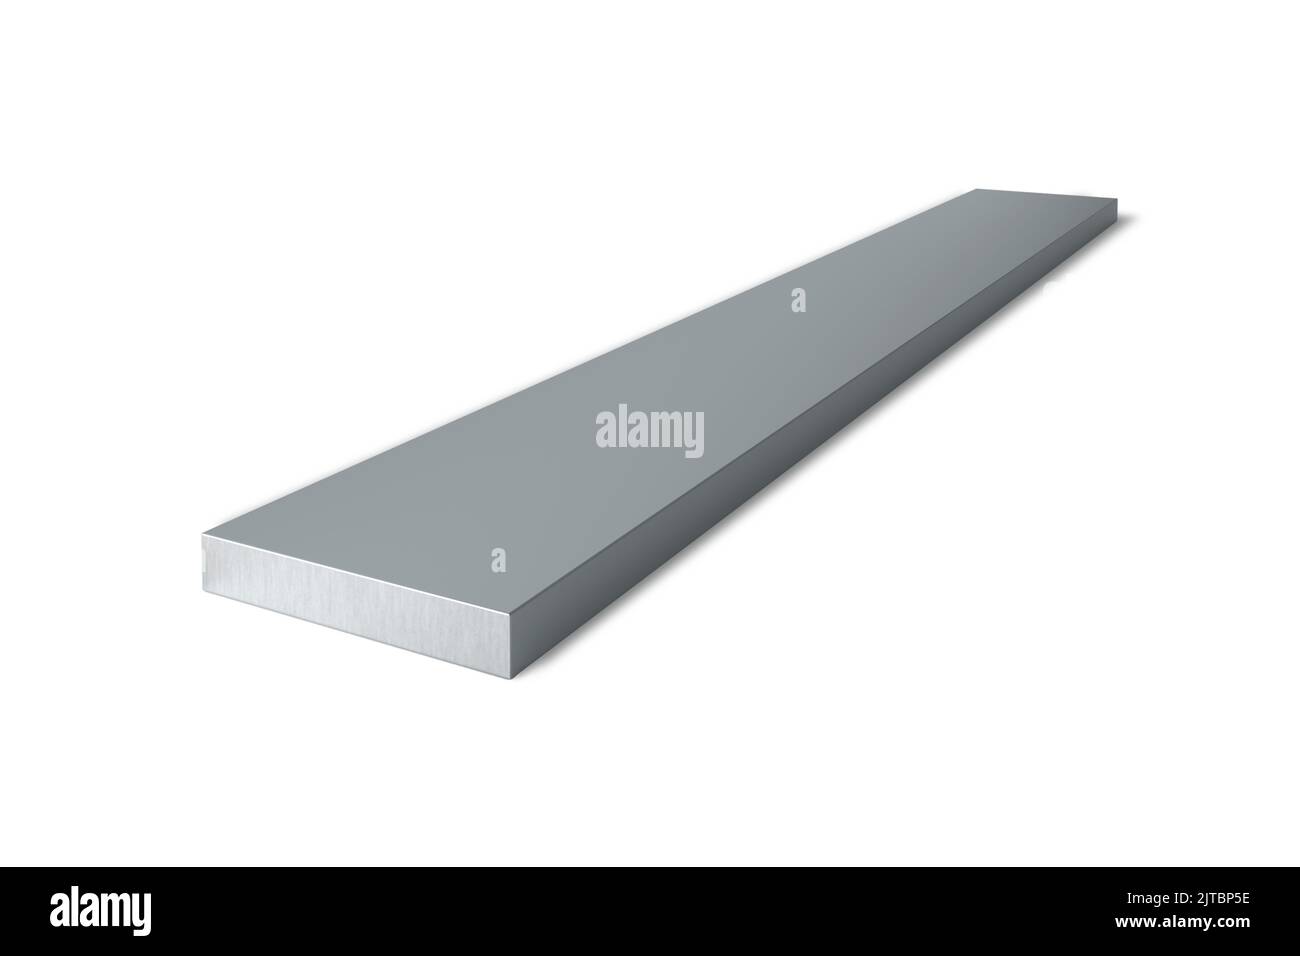 Steel Flat Bar isolated on white background - 3D illustration Stock Photo